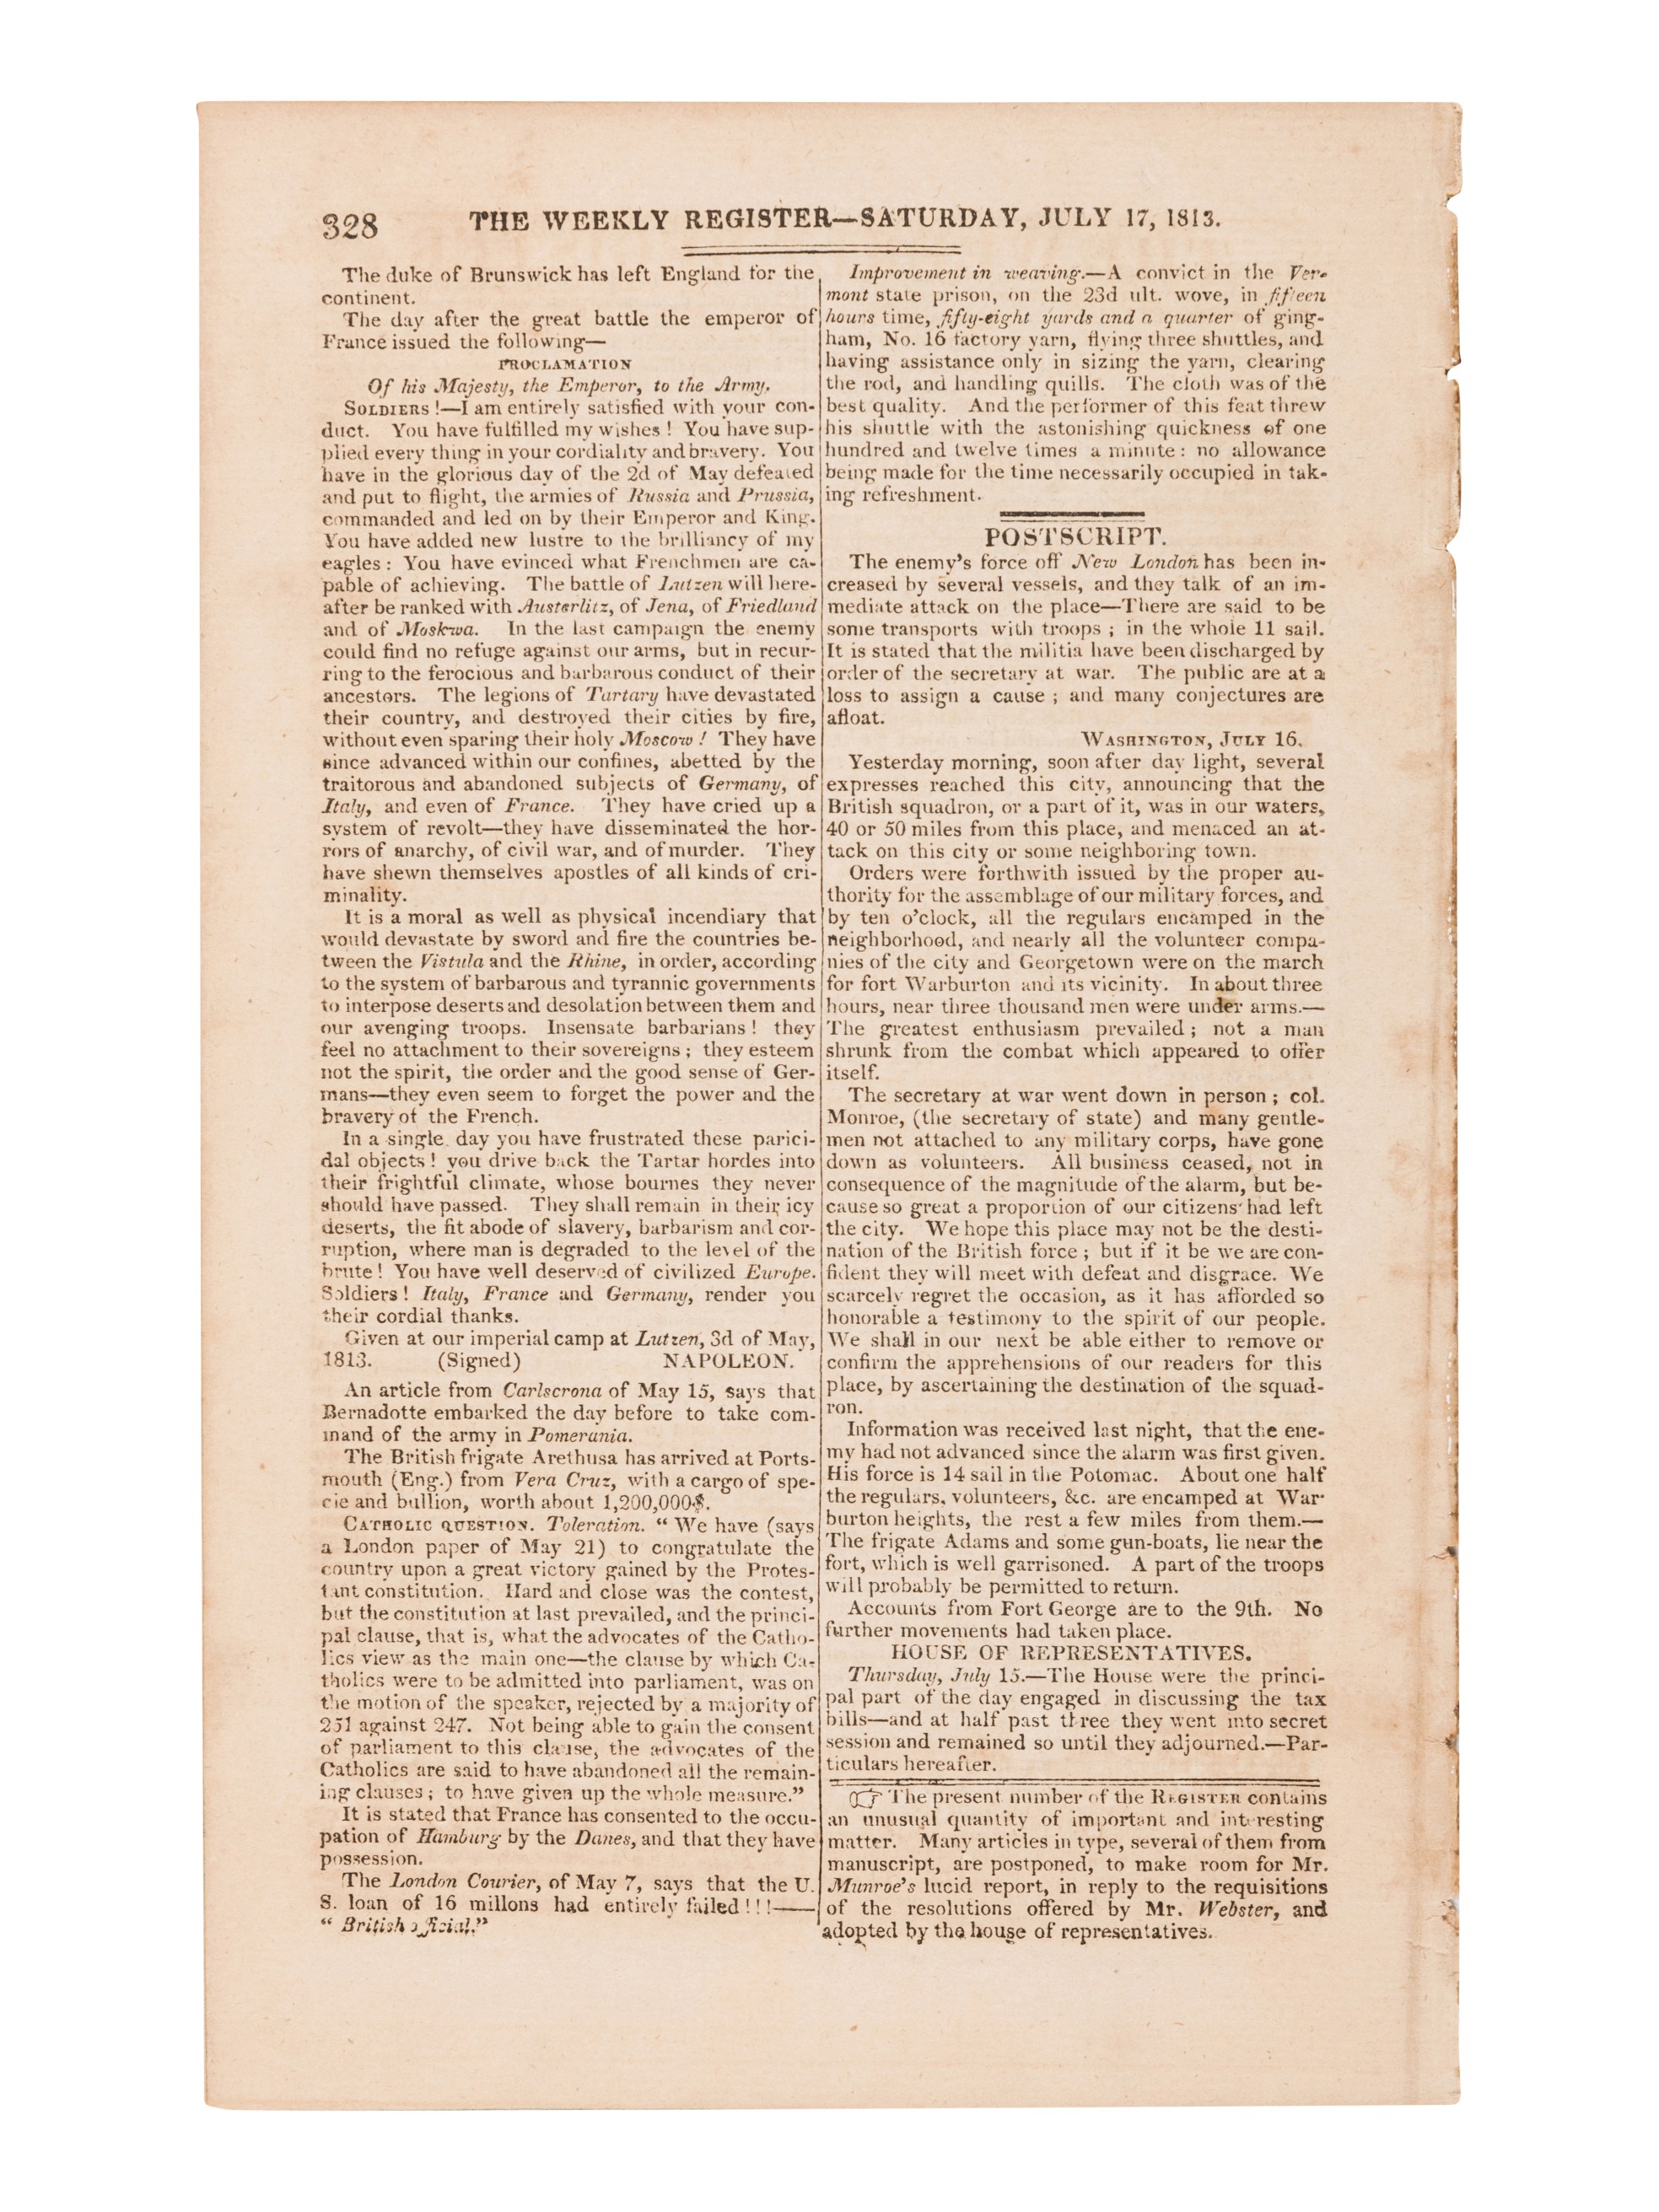 [NEWSPAPER - TEXAS NEWS - THE ALAMO]. Niles Weekly Register. Vol. 49 (September 5, 1835-February 27, - Image 2 of 2